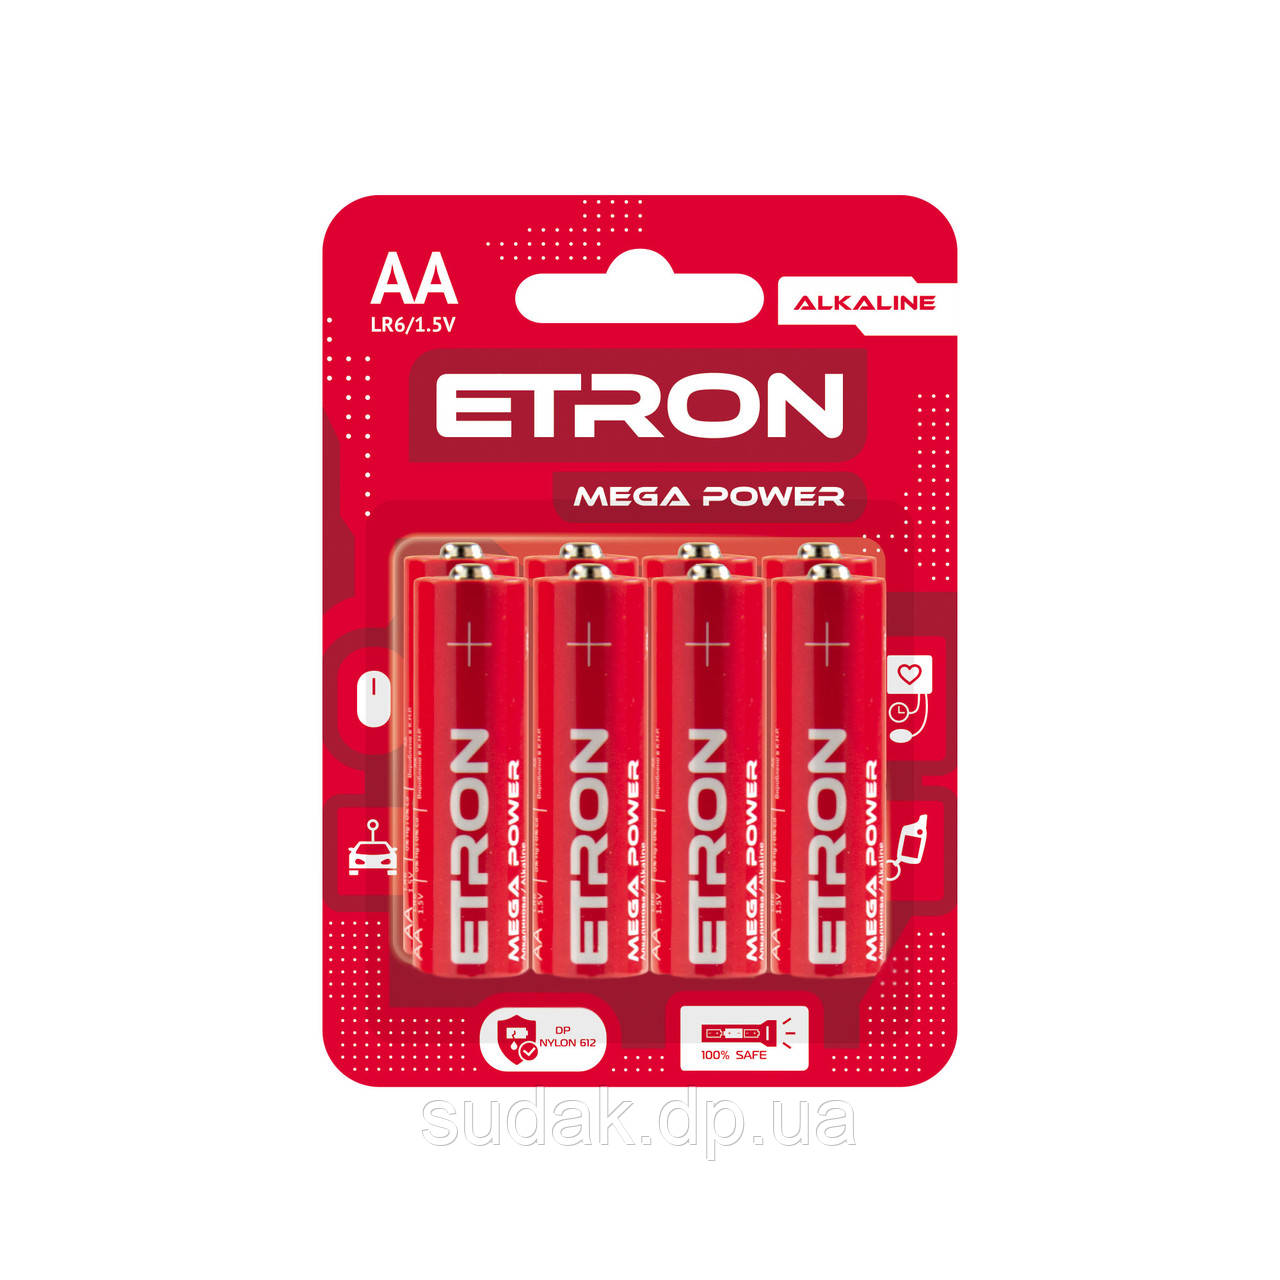 Батарейки ETRON Mega Power AA (LR6) 4 шт.